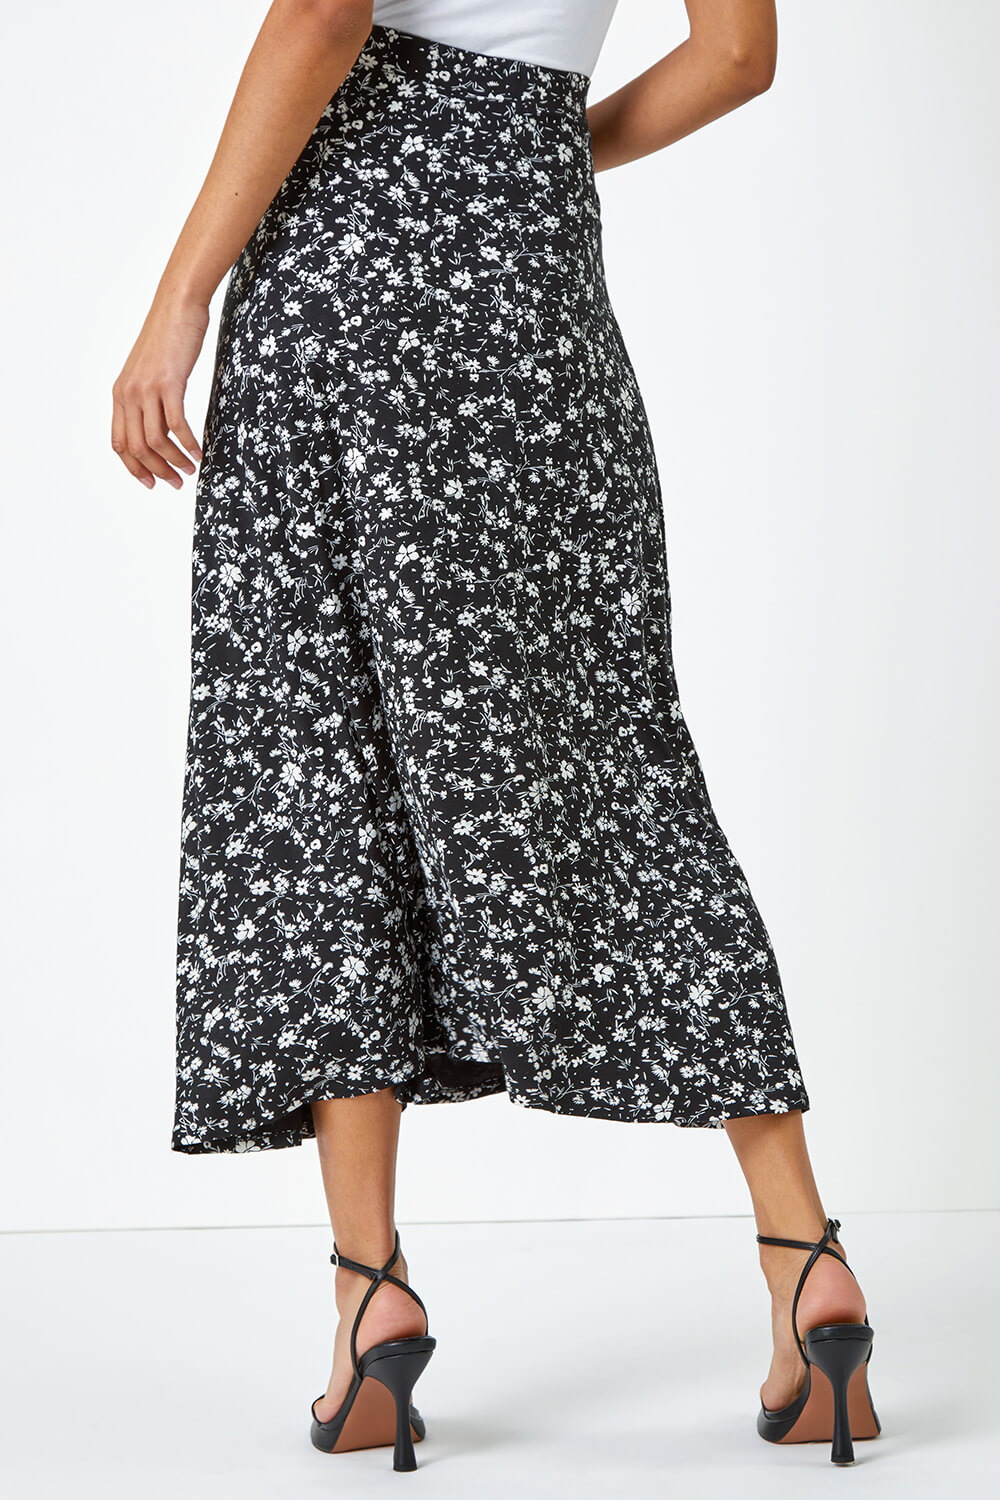 Black Ditsy Floral Print Midi Skirt, Image 3 of 4